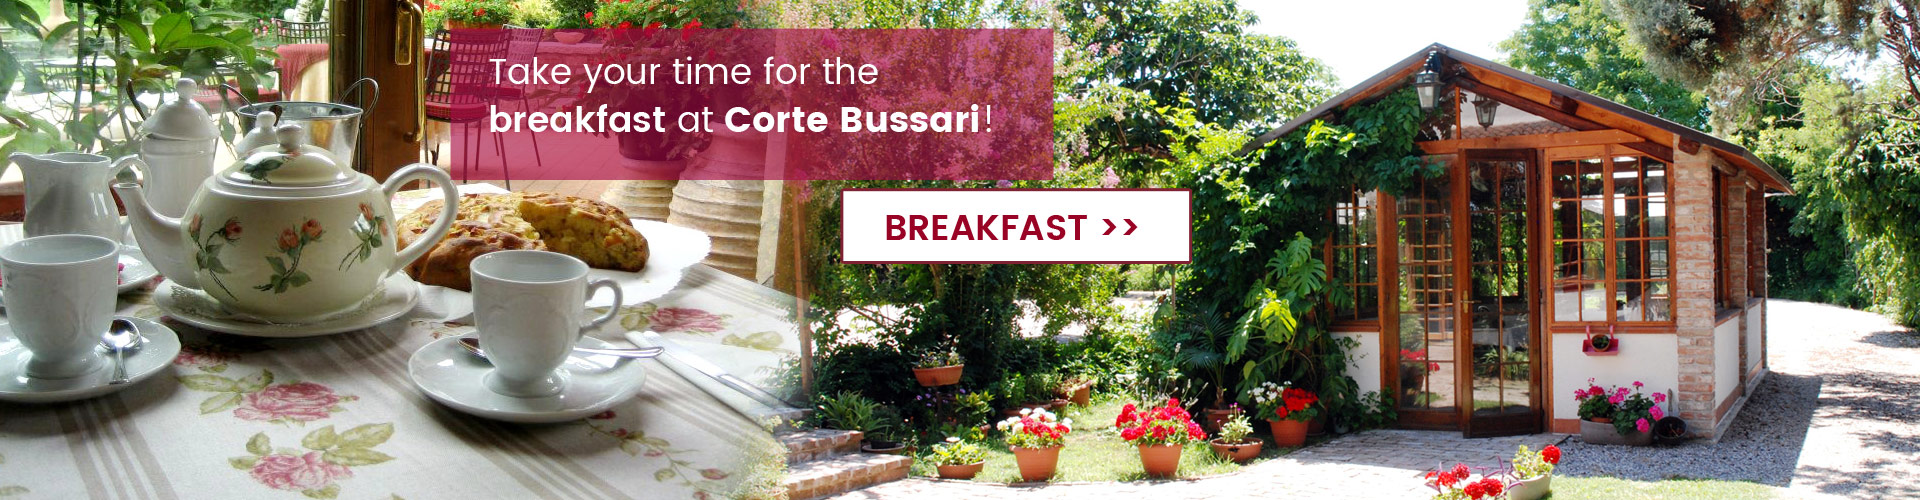 Bed & breakfast Corte Bussari is located in the south of Veneto Region